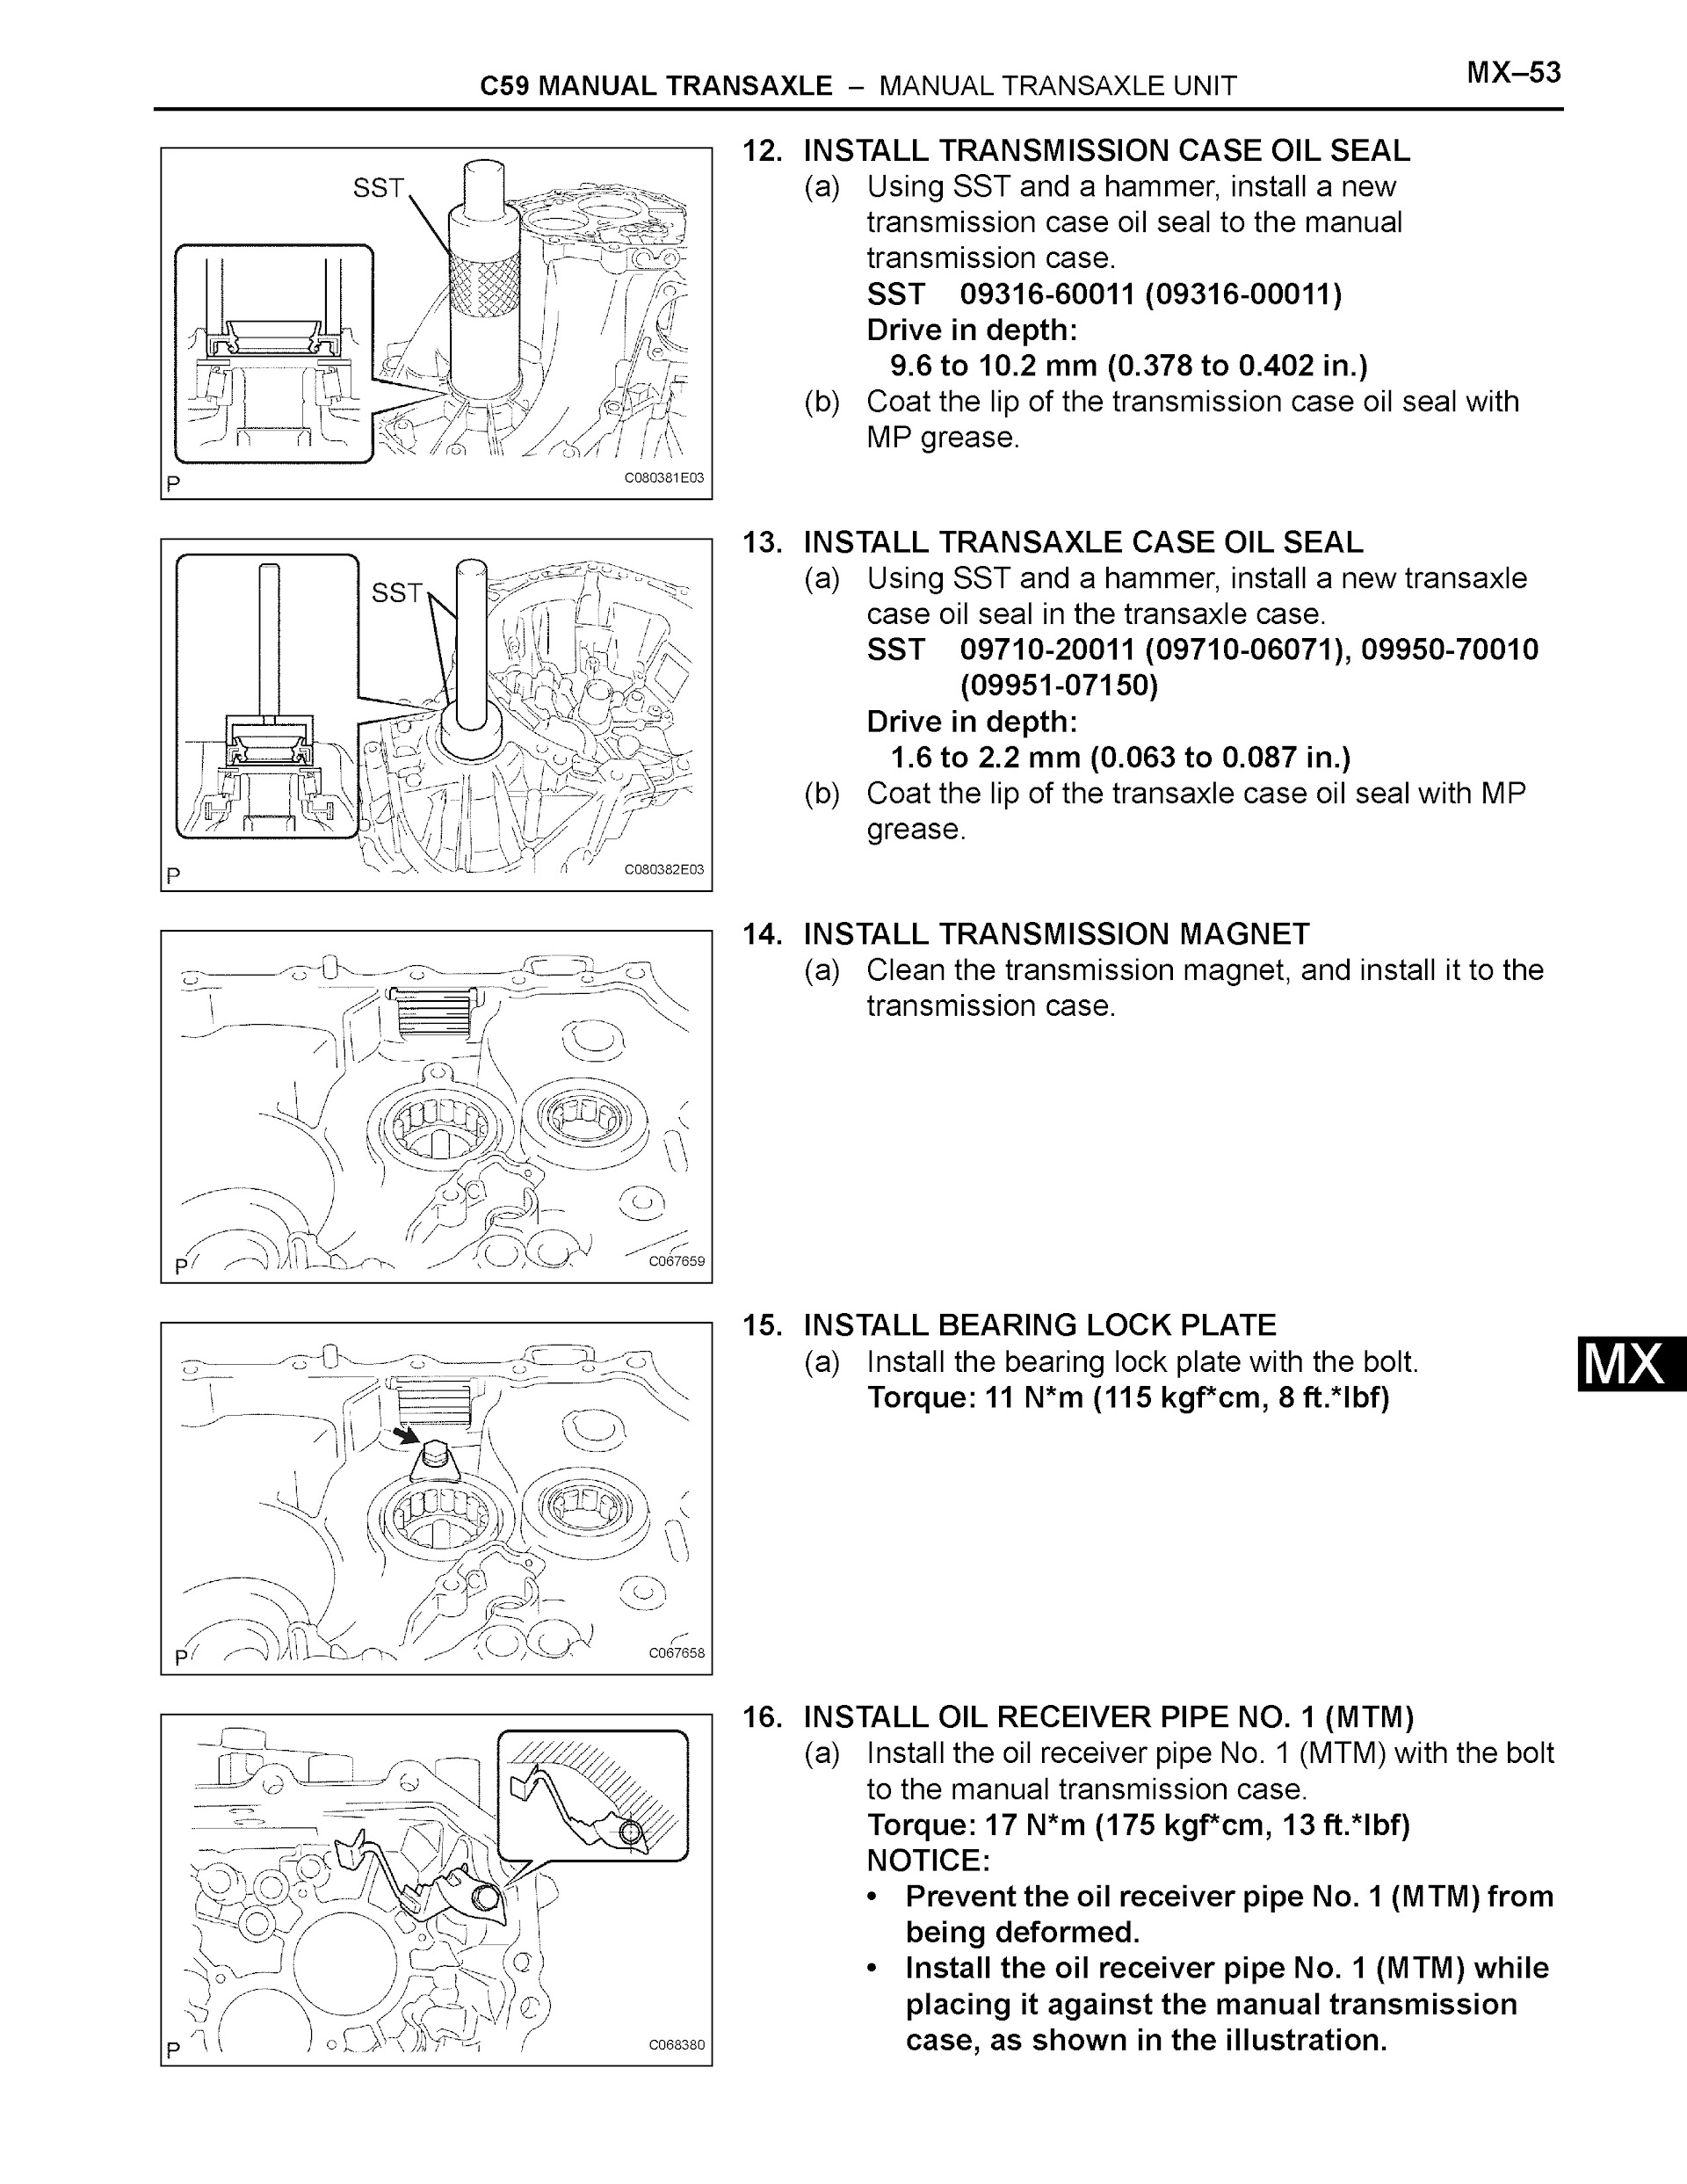 2007 Toyota Matrix Repair Manual, C56 Manual Transaxle